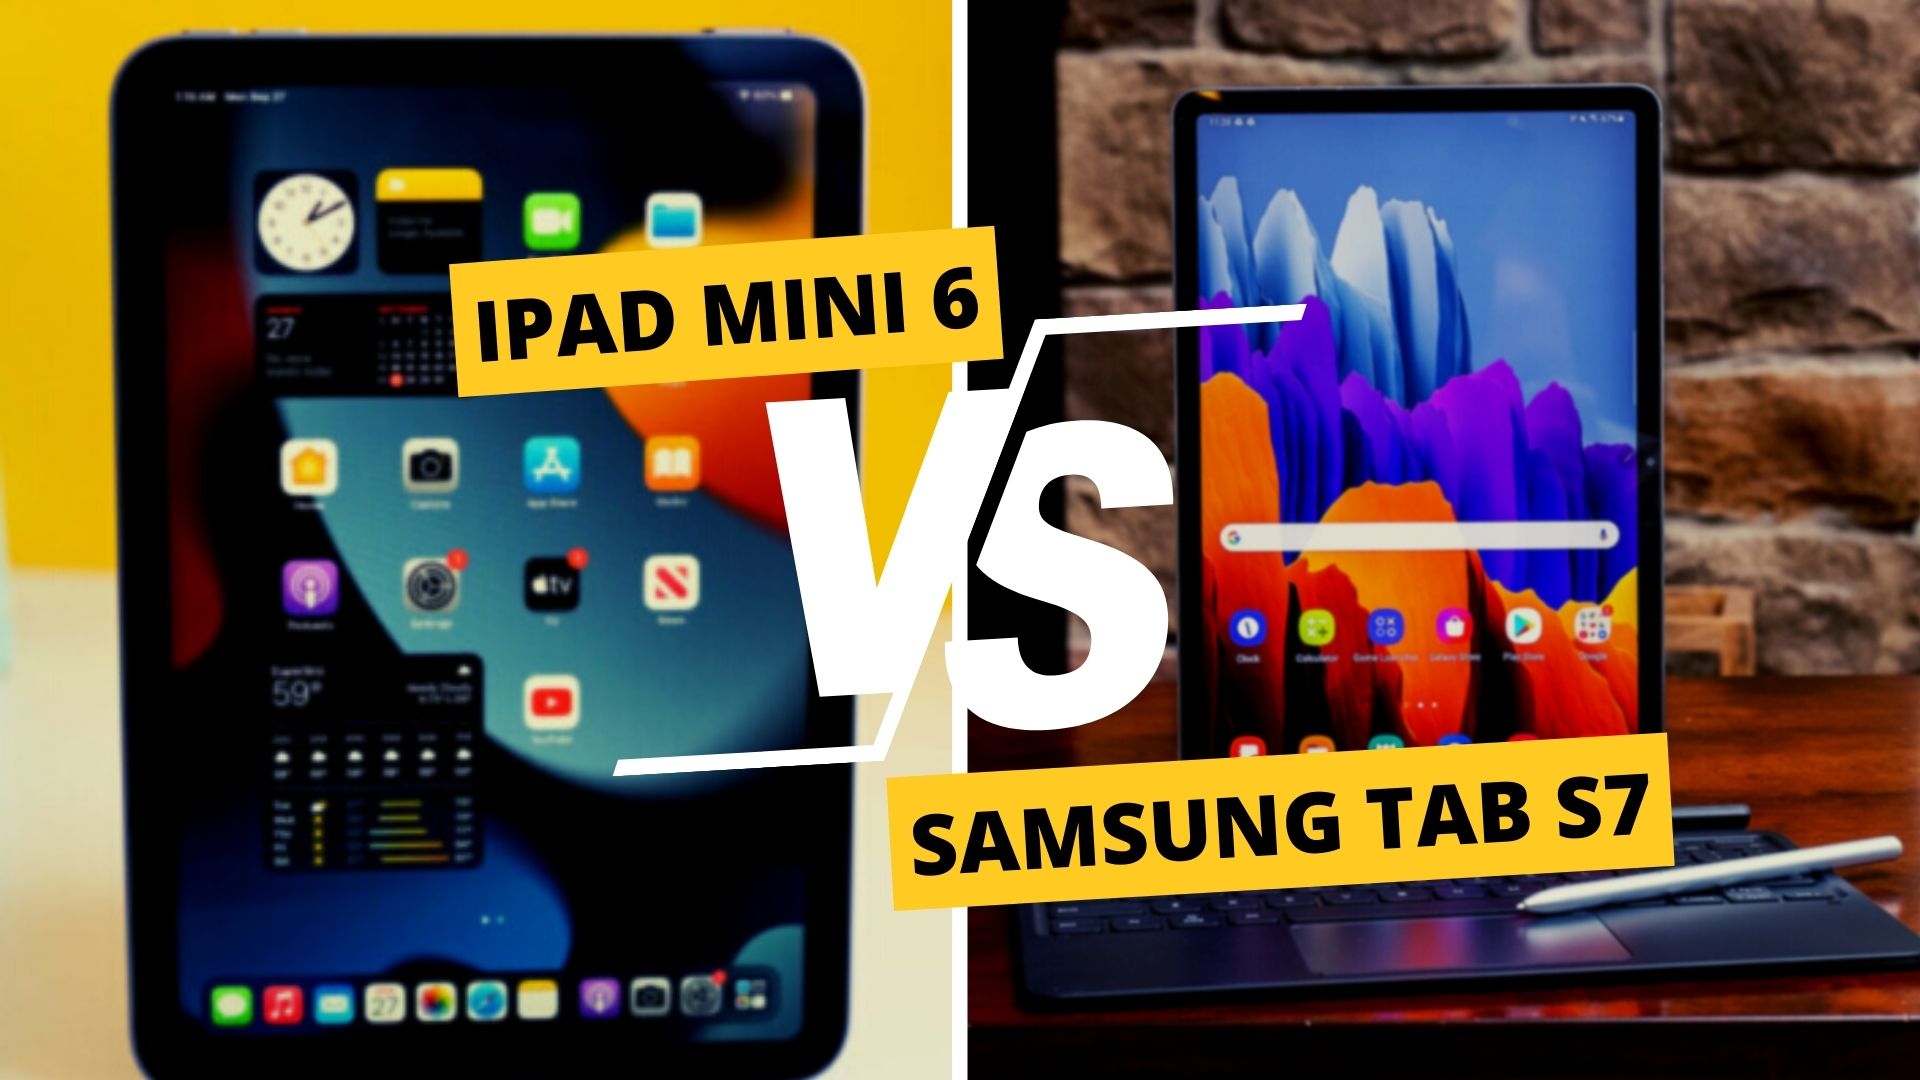 basura Intolerable metodología iPad Mini 6 vs Samsung Tab S7: Why This Comparison?